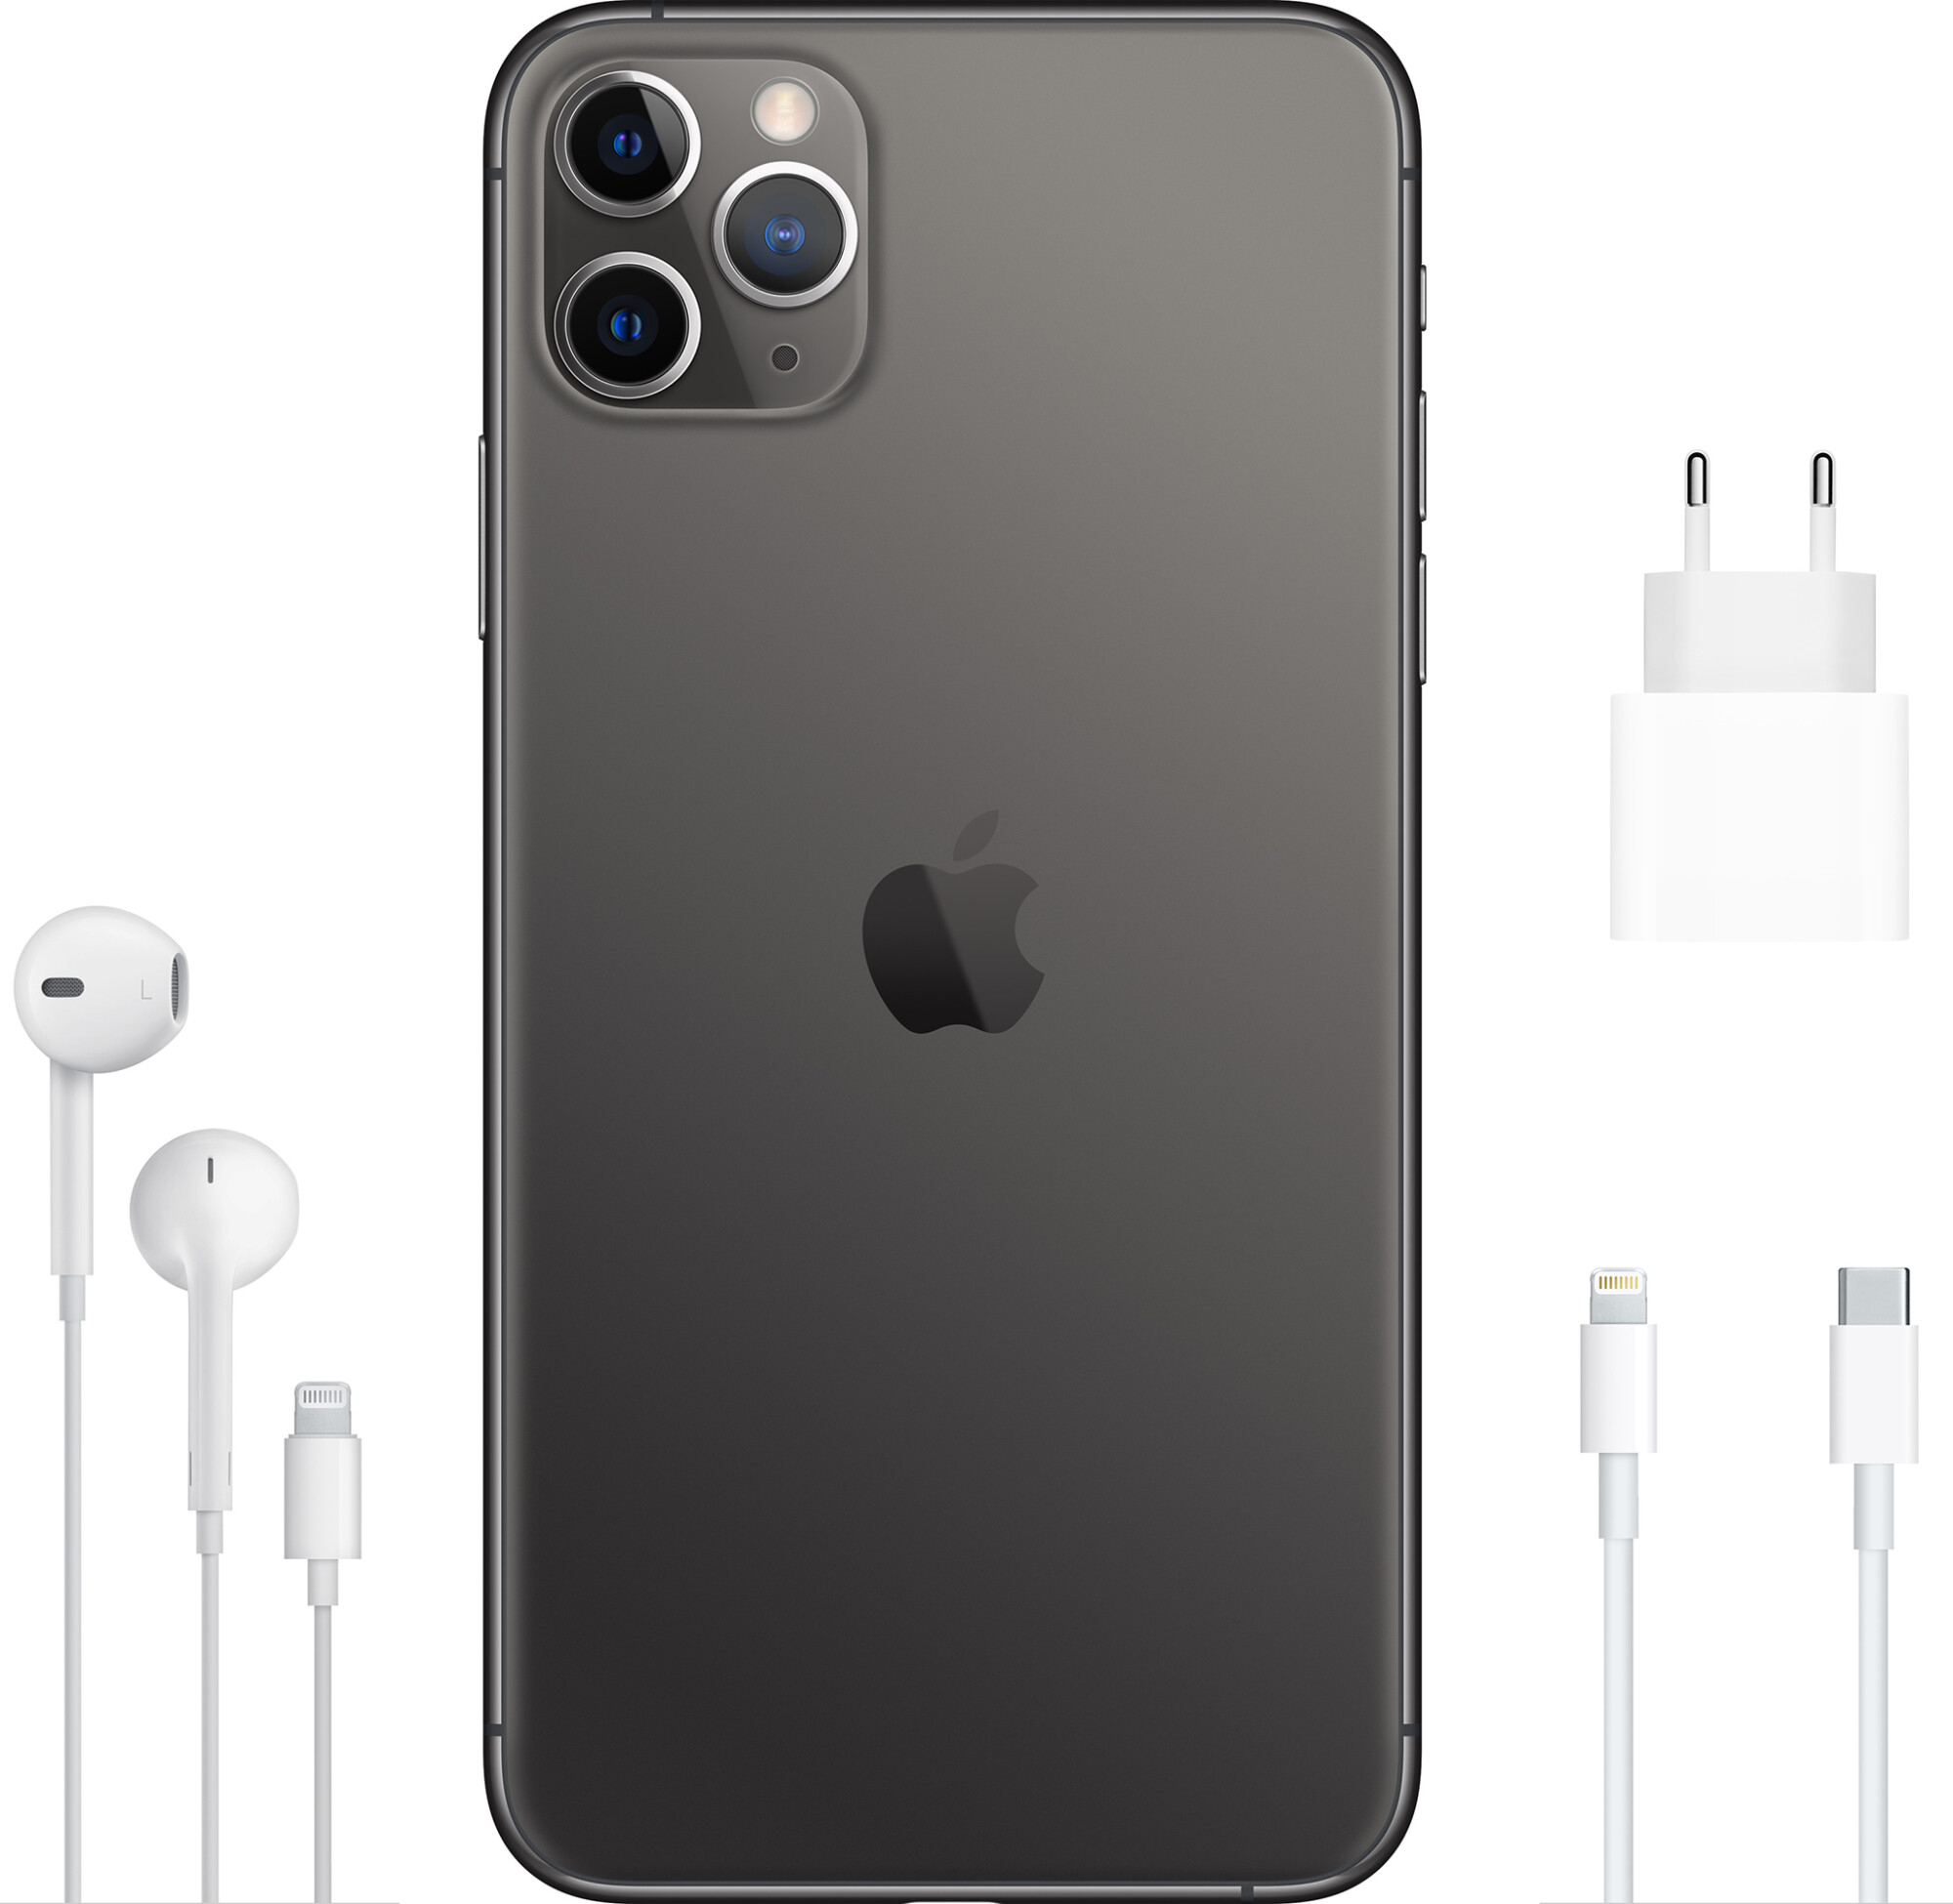  Apple iPhone 11 Pro Max 64GB Space Gray (MWHD2)